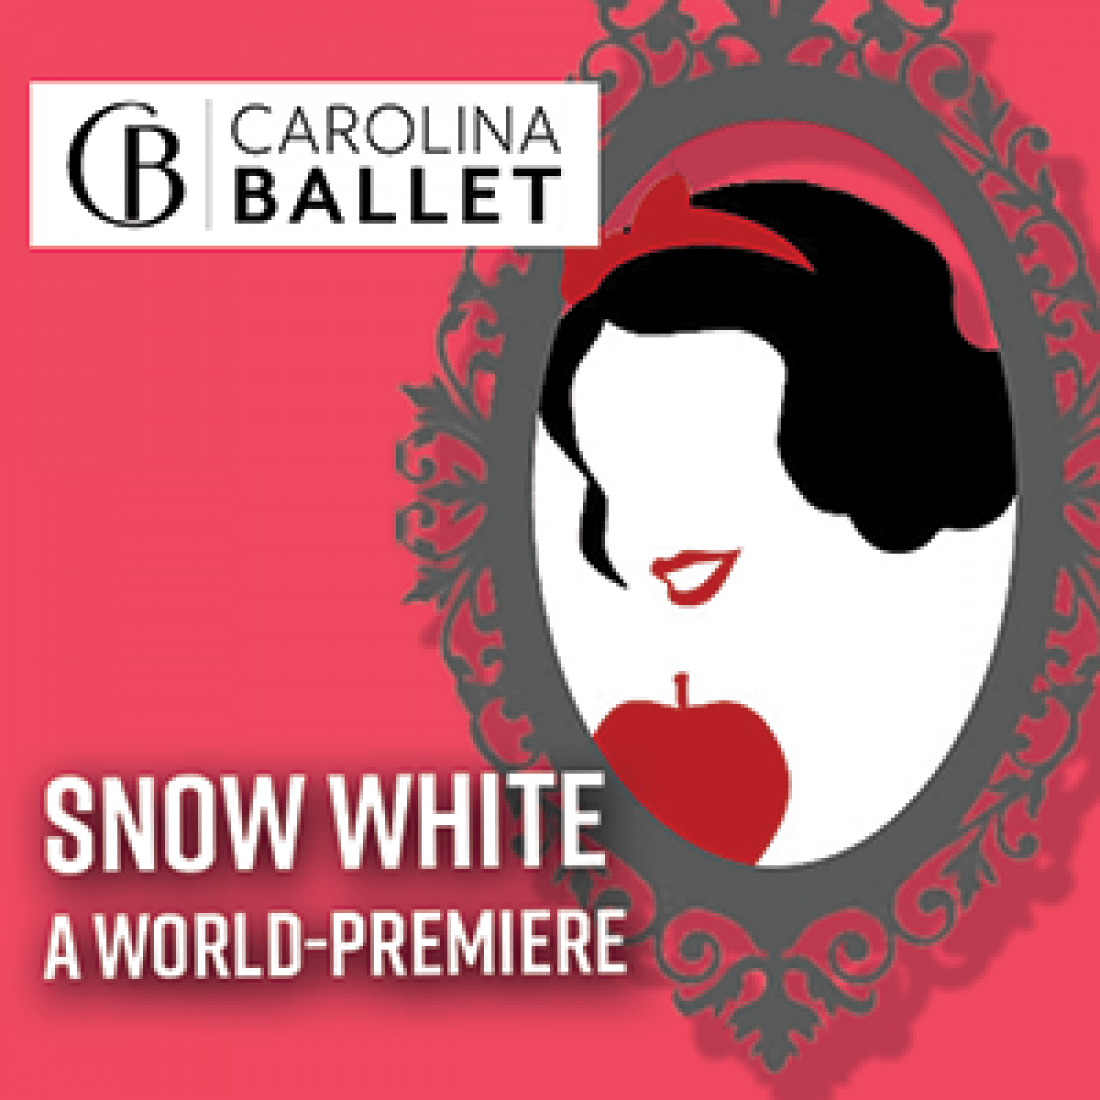 Carolina Ballet promotional image for Snow White